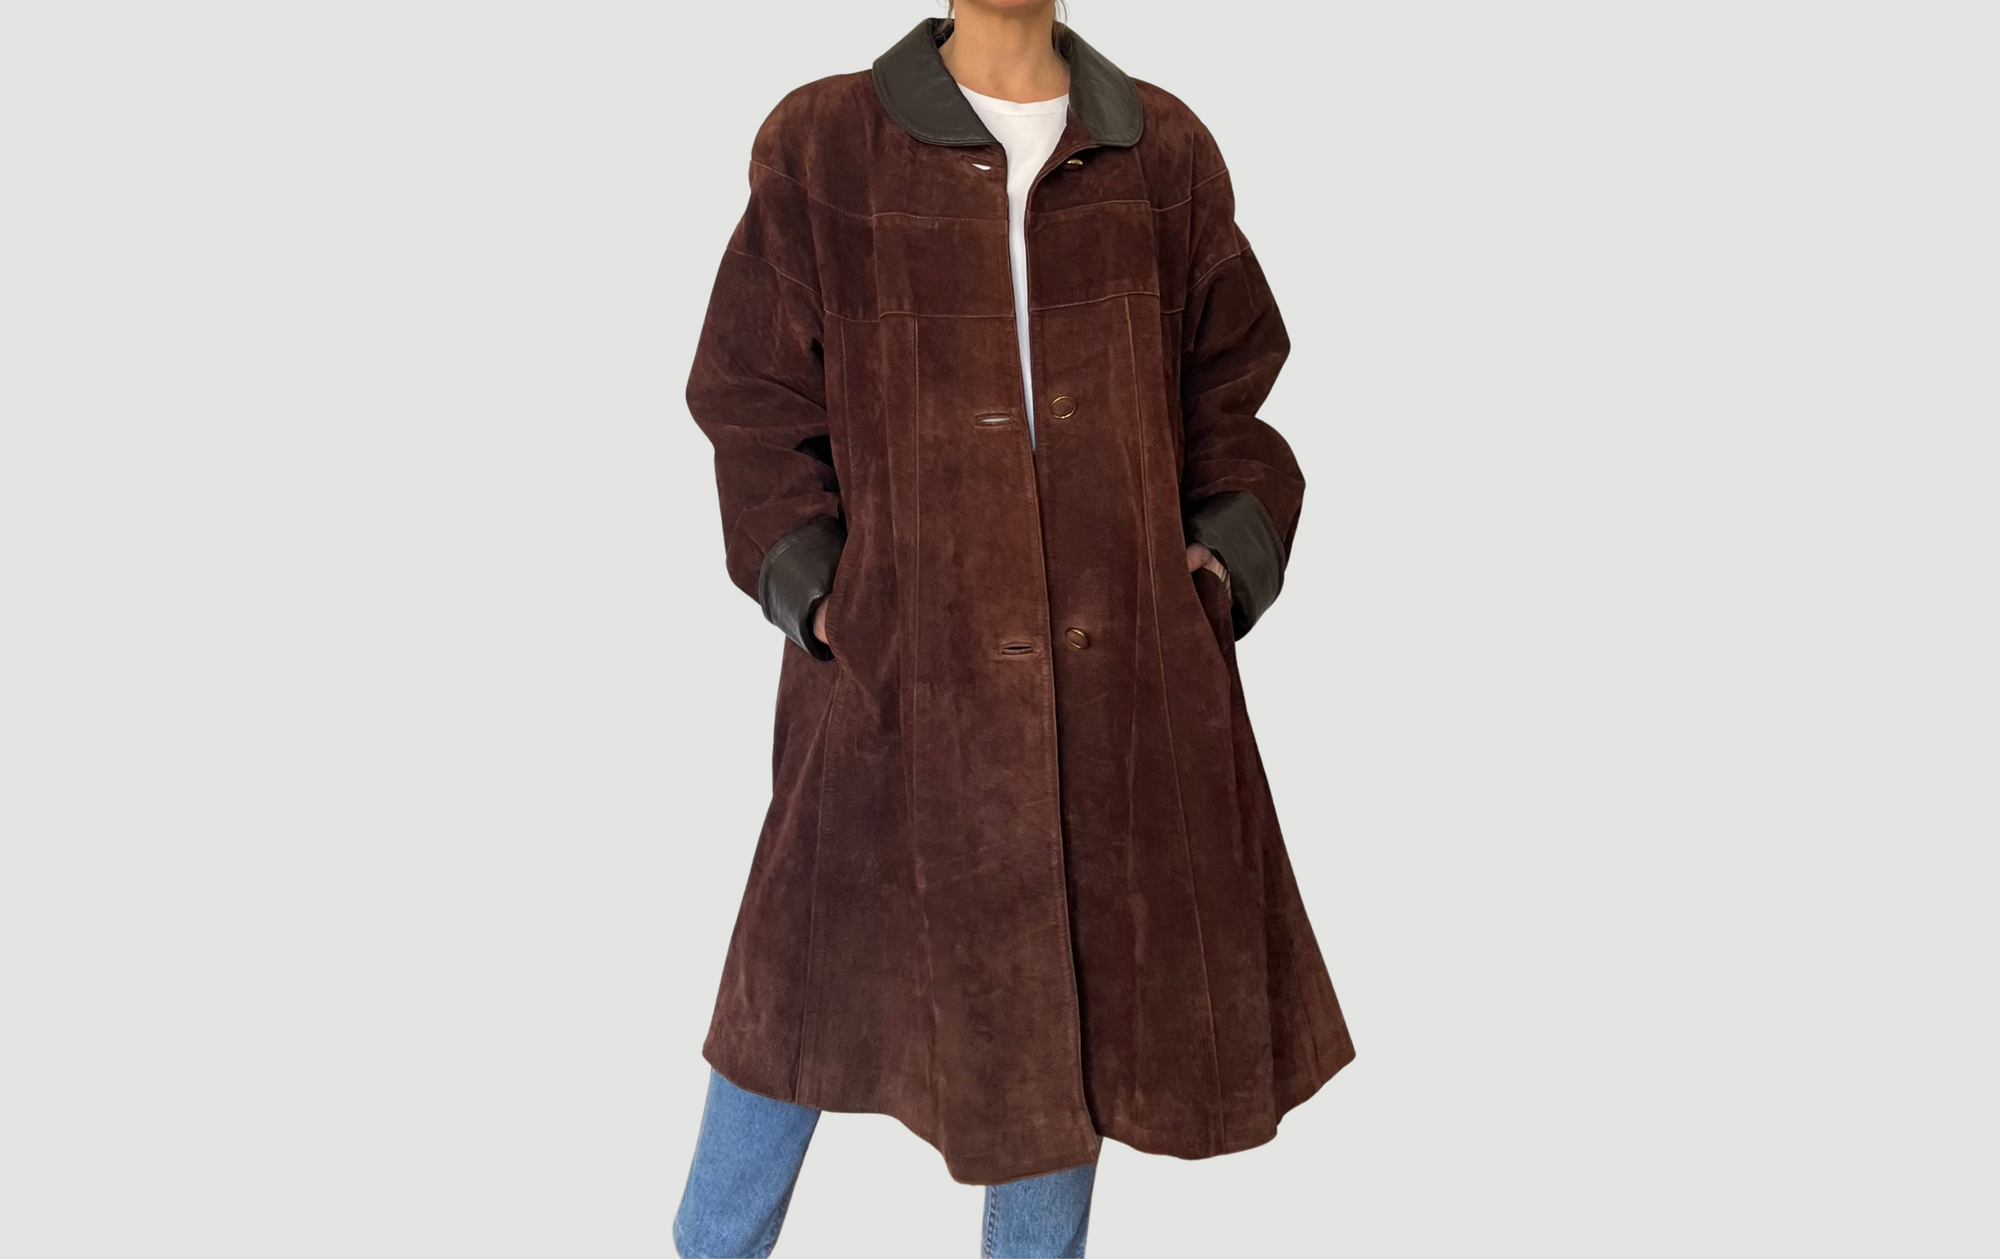 Vintage Brown Suede Leather Coat